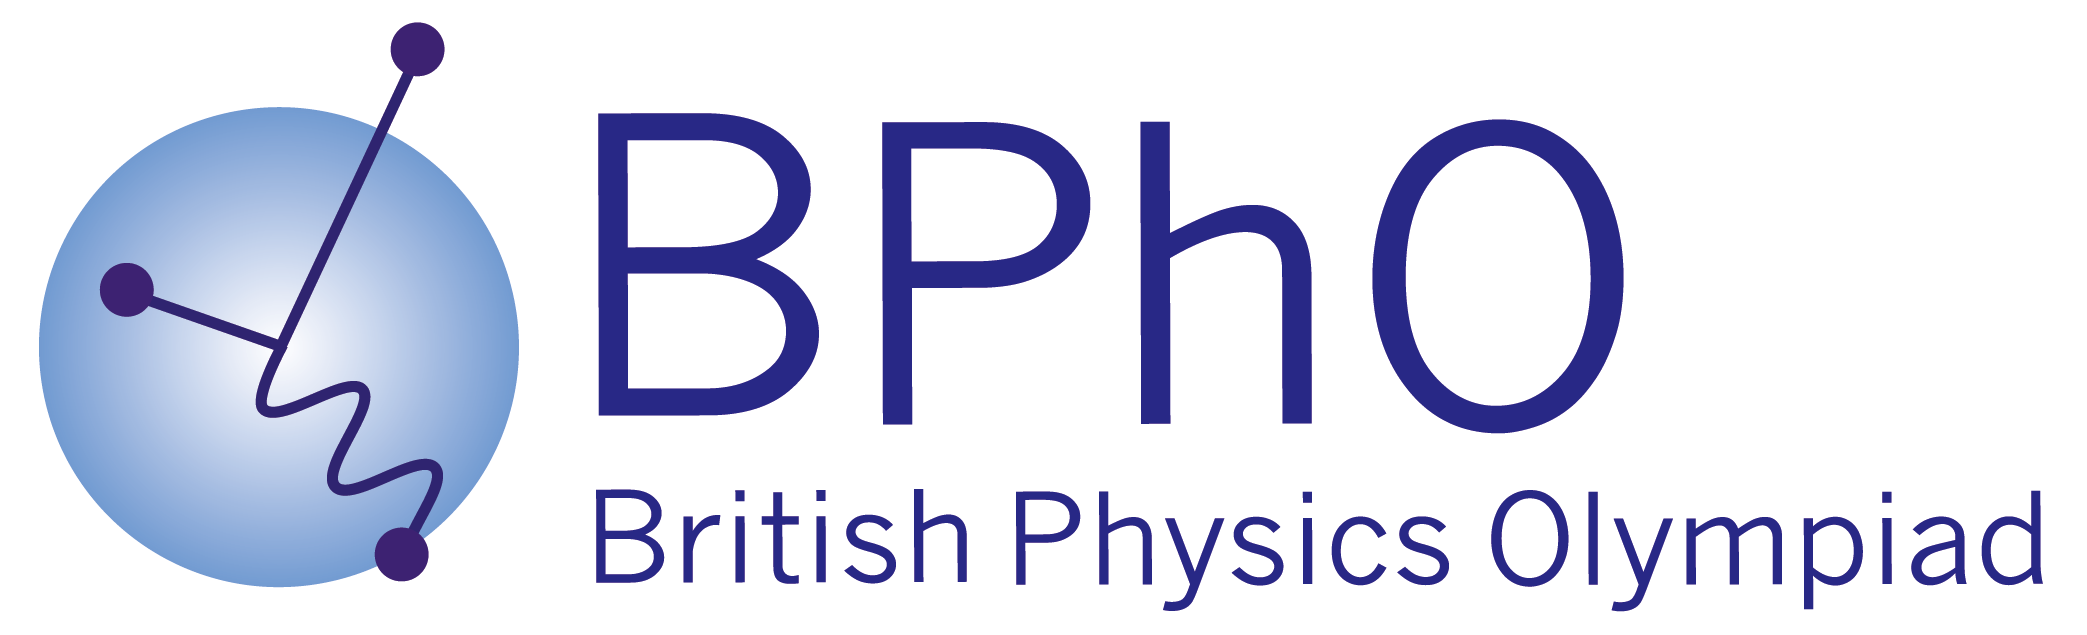 British Physics Olympiad (BPhO) logo